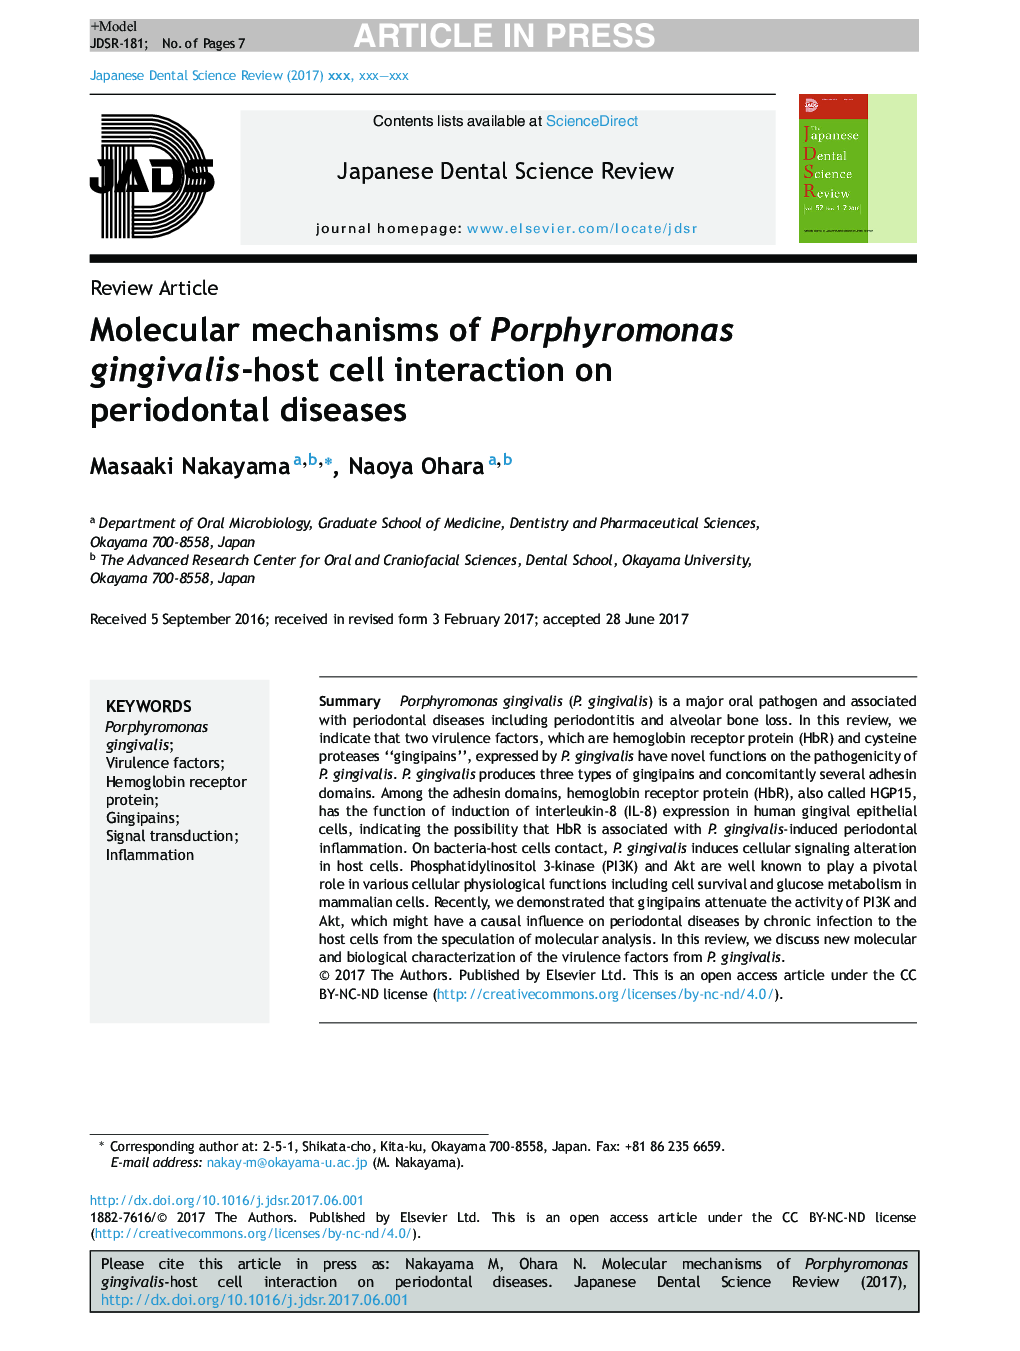 Molecular mechanisms of Porphyromonas gingivalis-host cell interaction on periodontal diseases